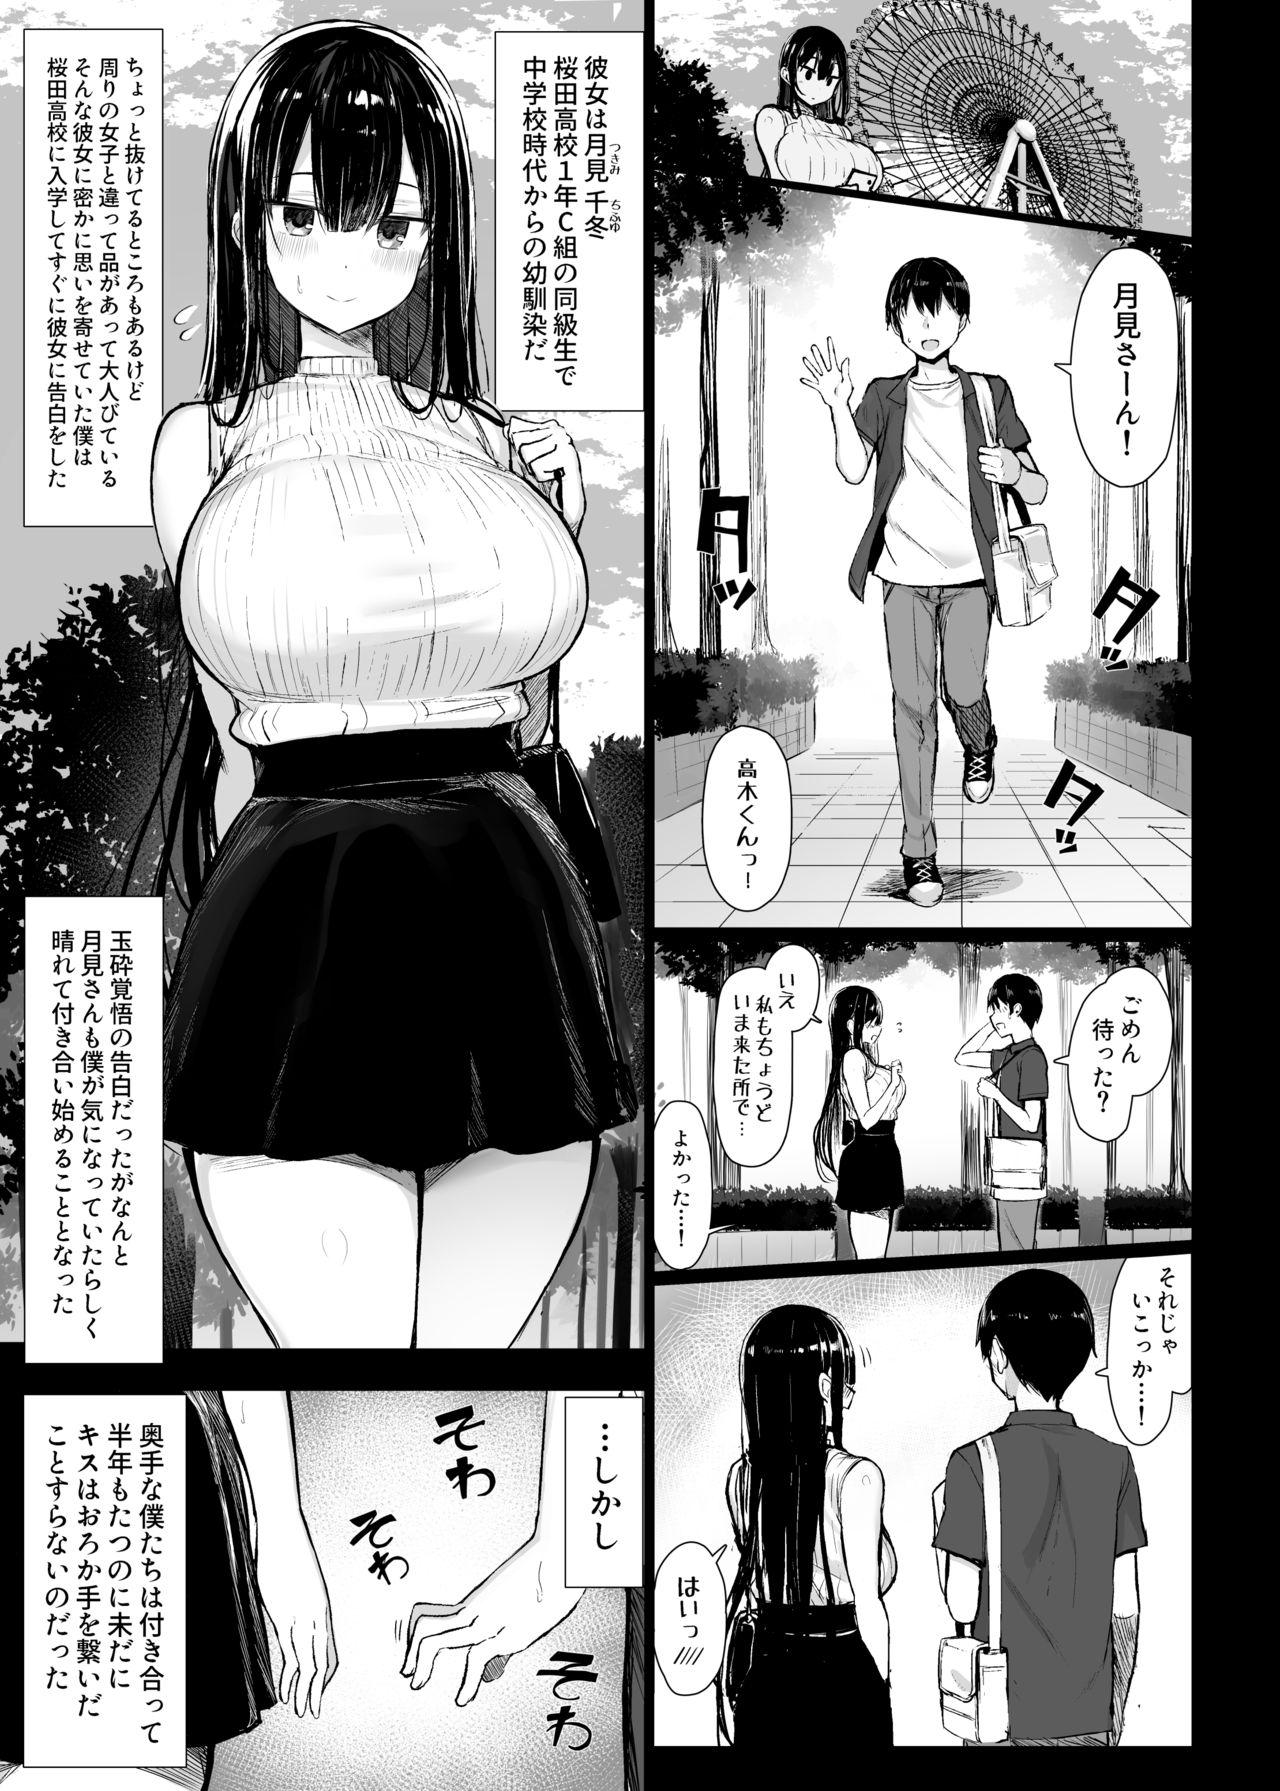 Gayclips Seiso Kanojo, Ochiru. - Original Missionary Position Porn - Page 3